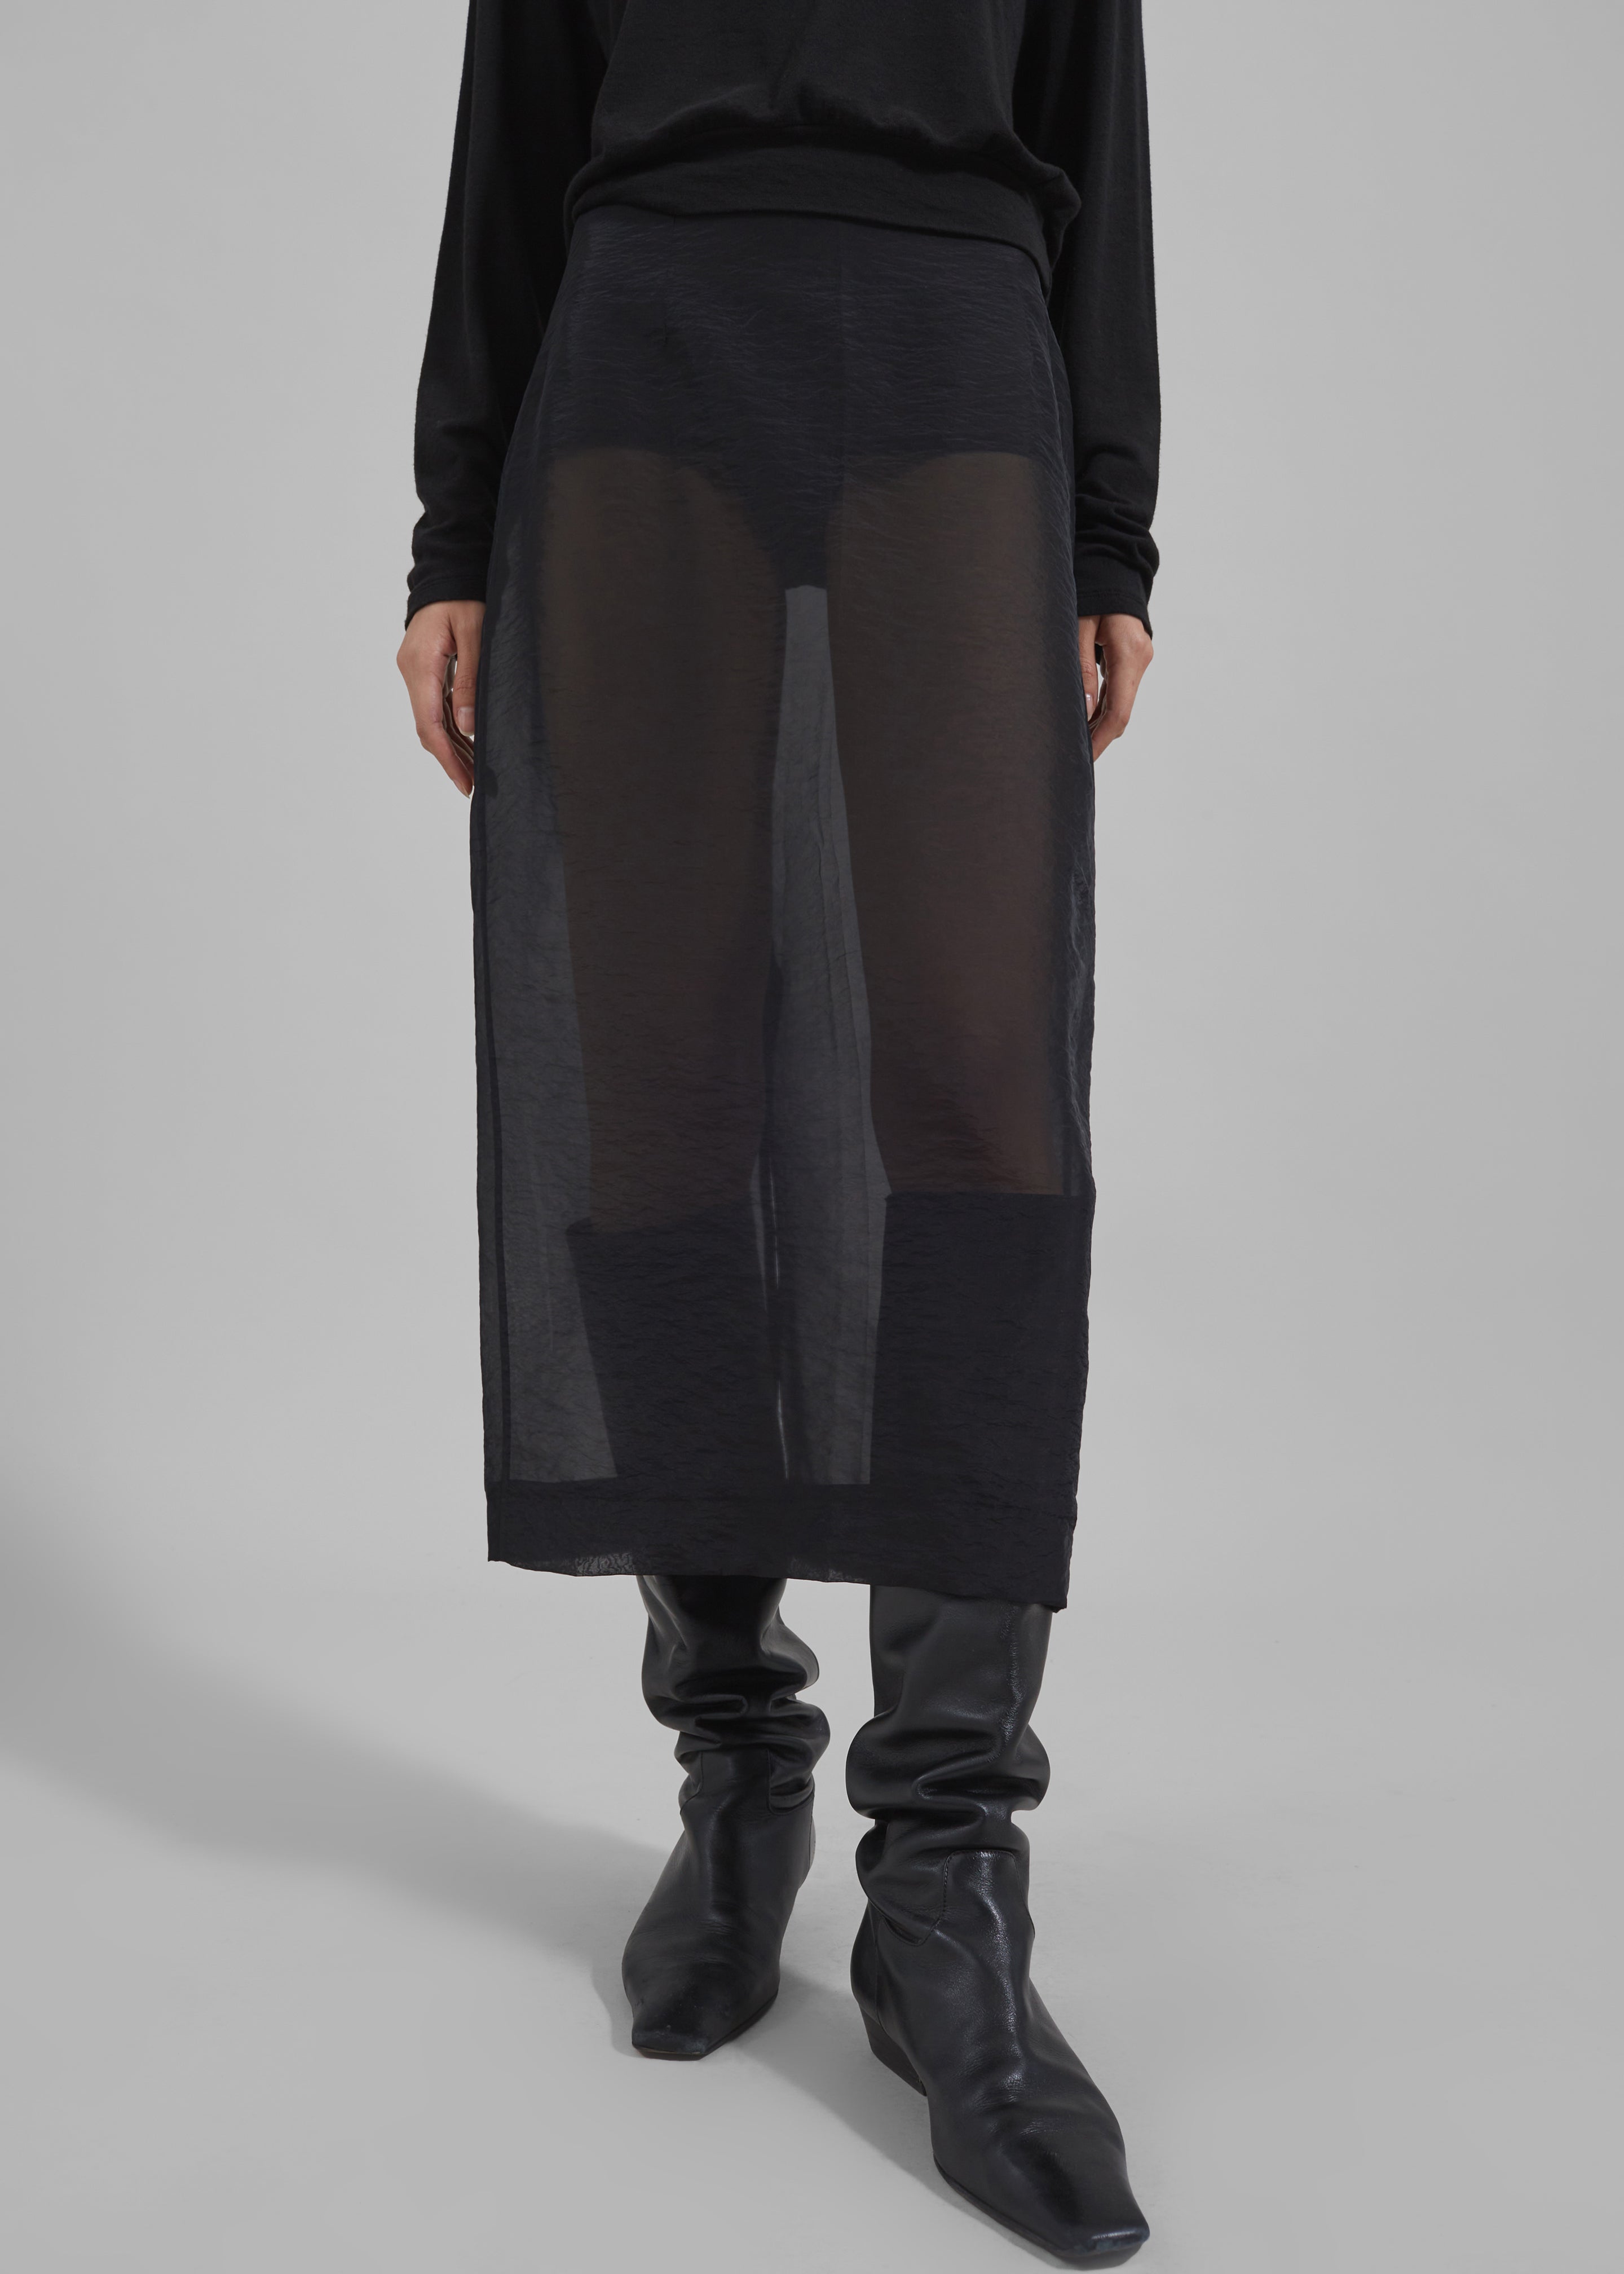 Yara Sheer Midi Skirt - Black - 2